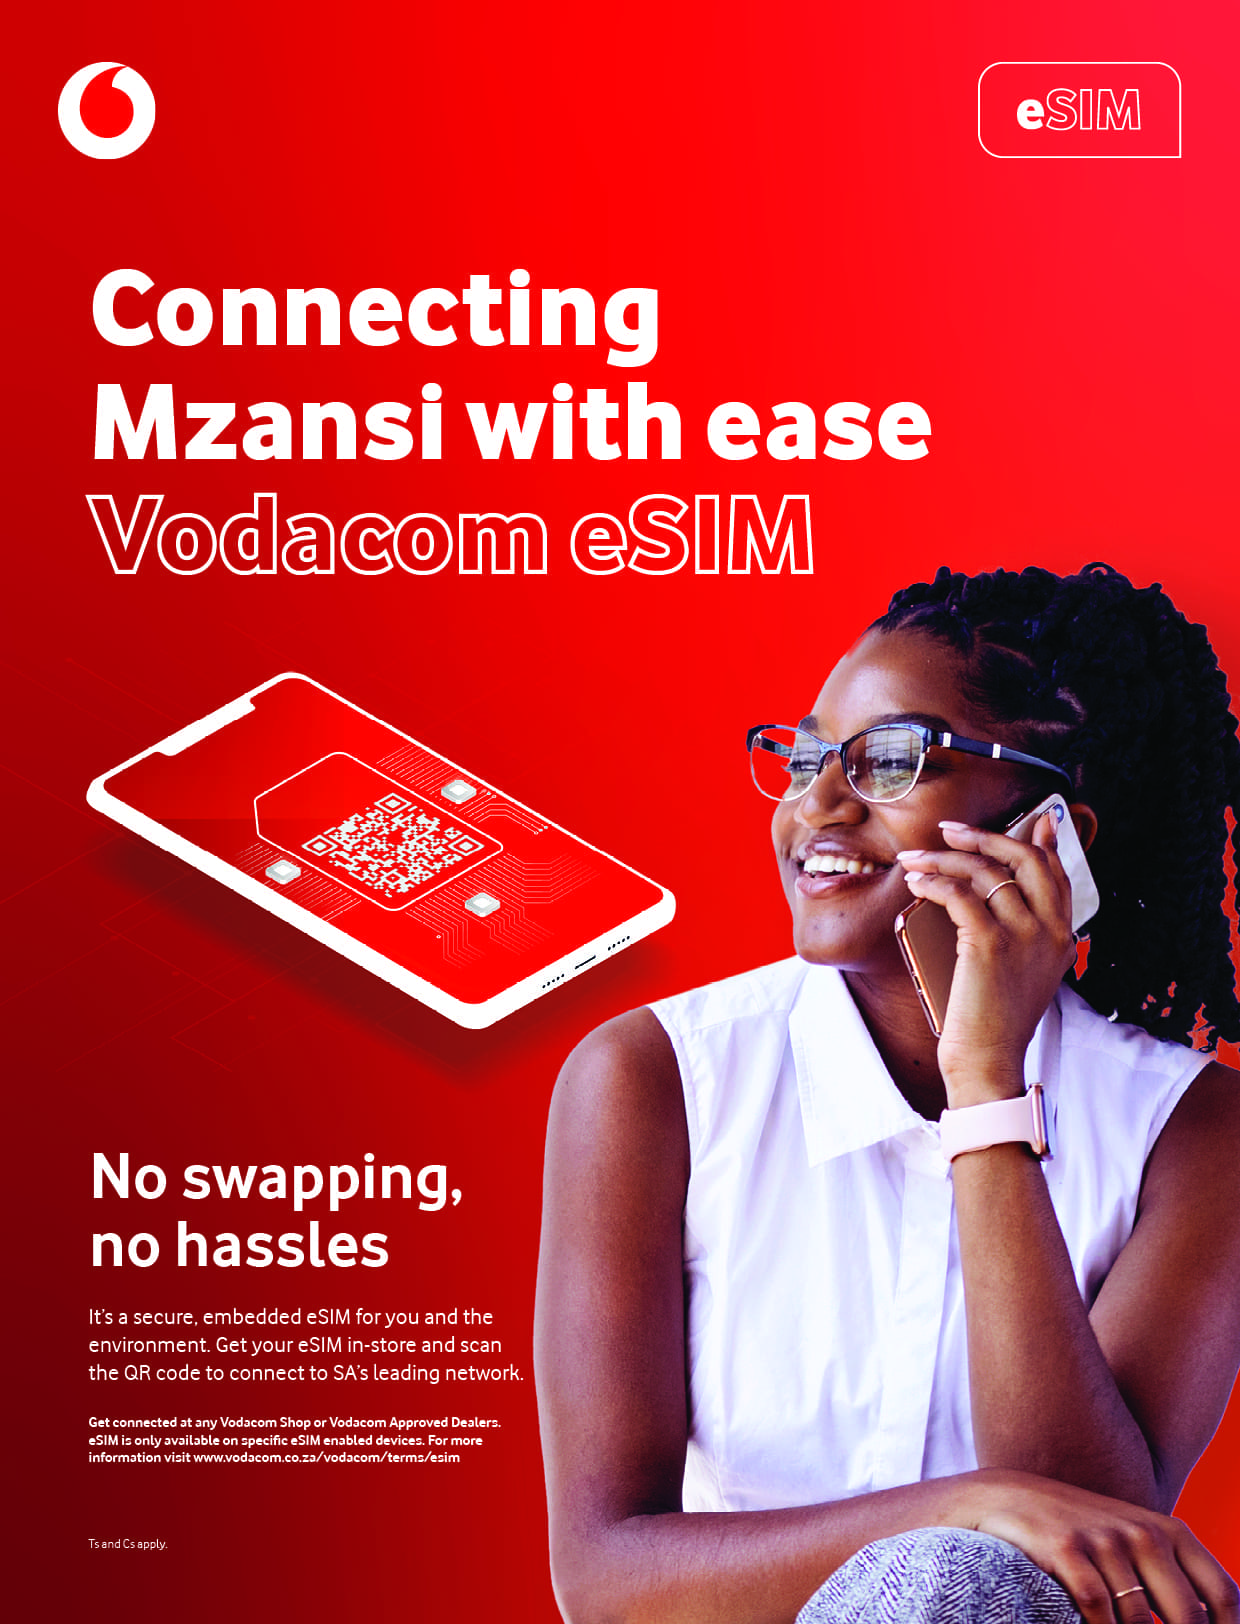 Vodacom eSim support